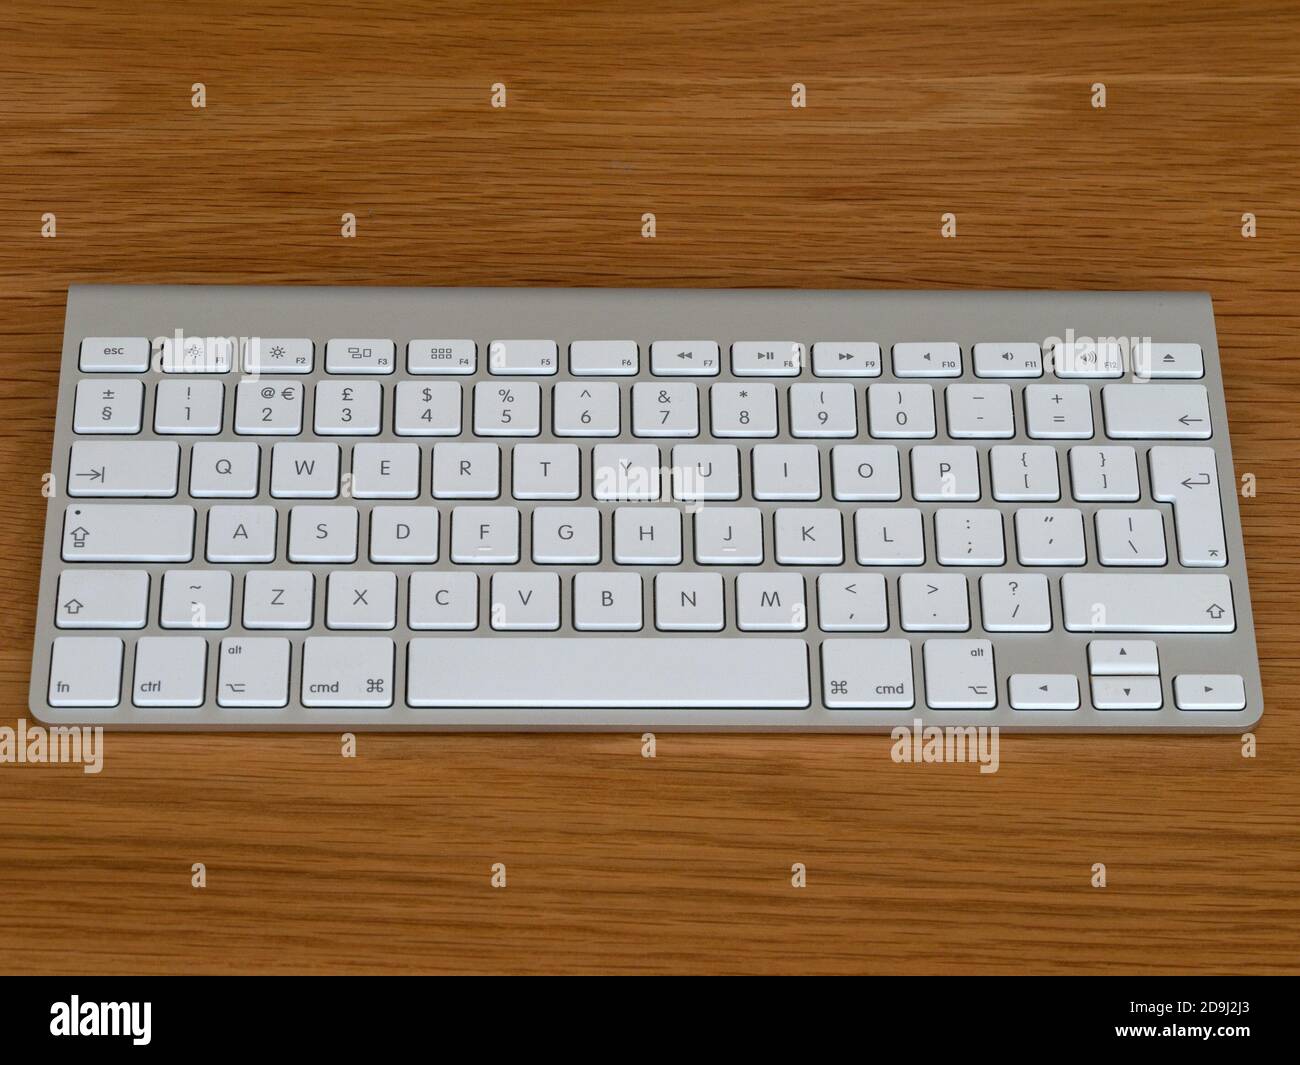 Apple Magic wireless bluetooth computer UK English QWERTY keyboard with white keys and silver anodised Aluminium metal body on wood background. Stock Photo